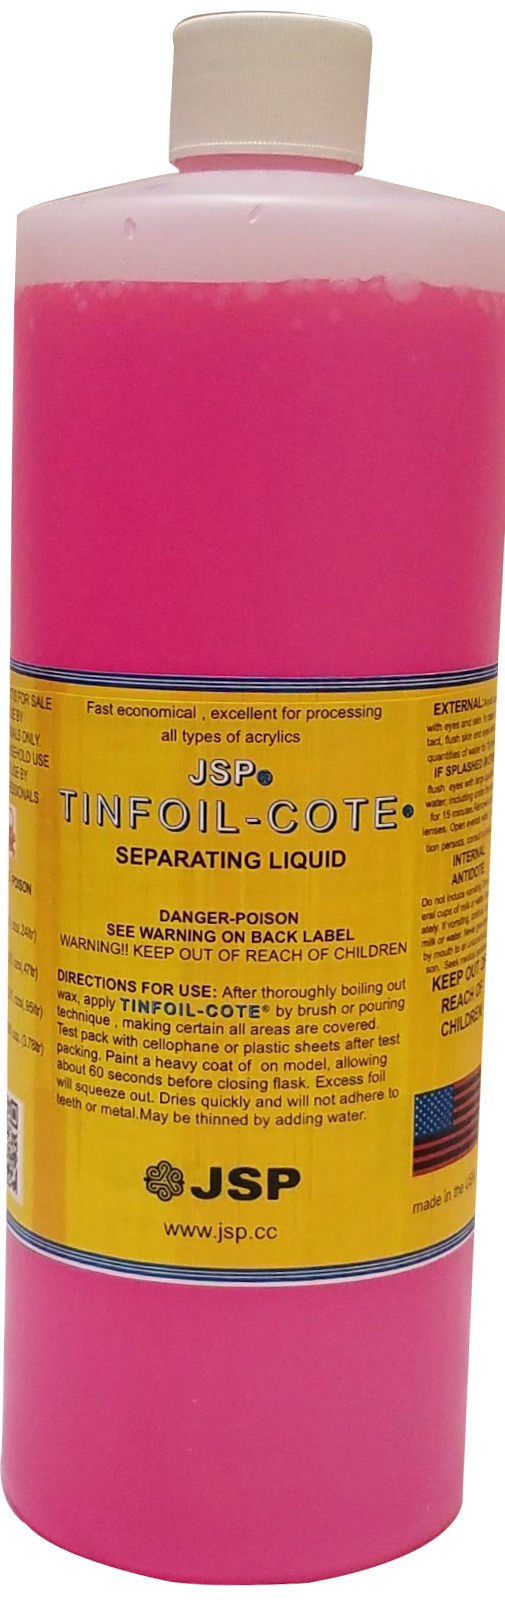 JSP® TINFOIL-COTE SEPARATING LIQUID (thick)16 ozs